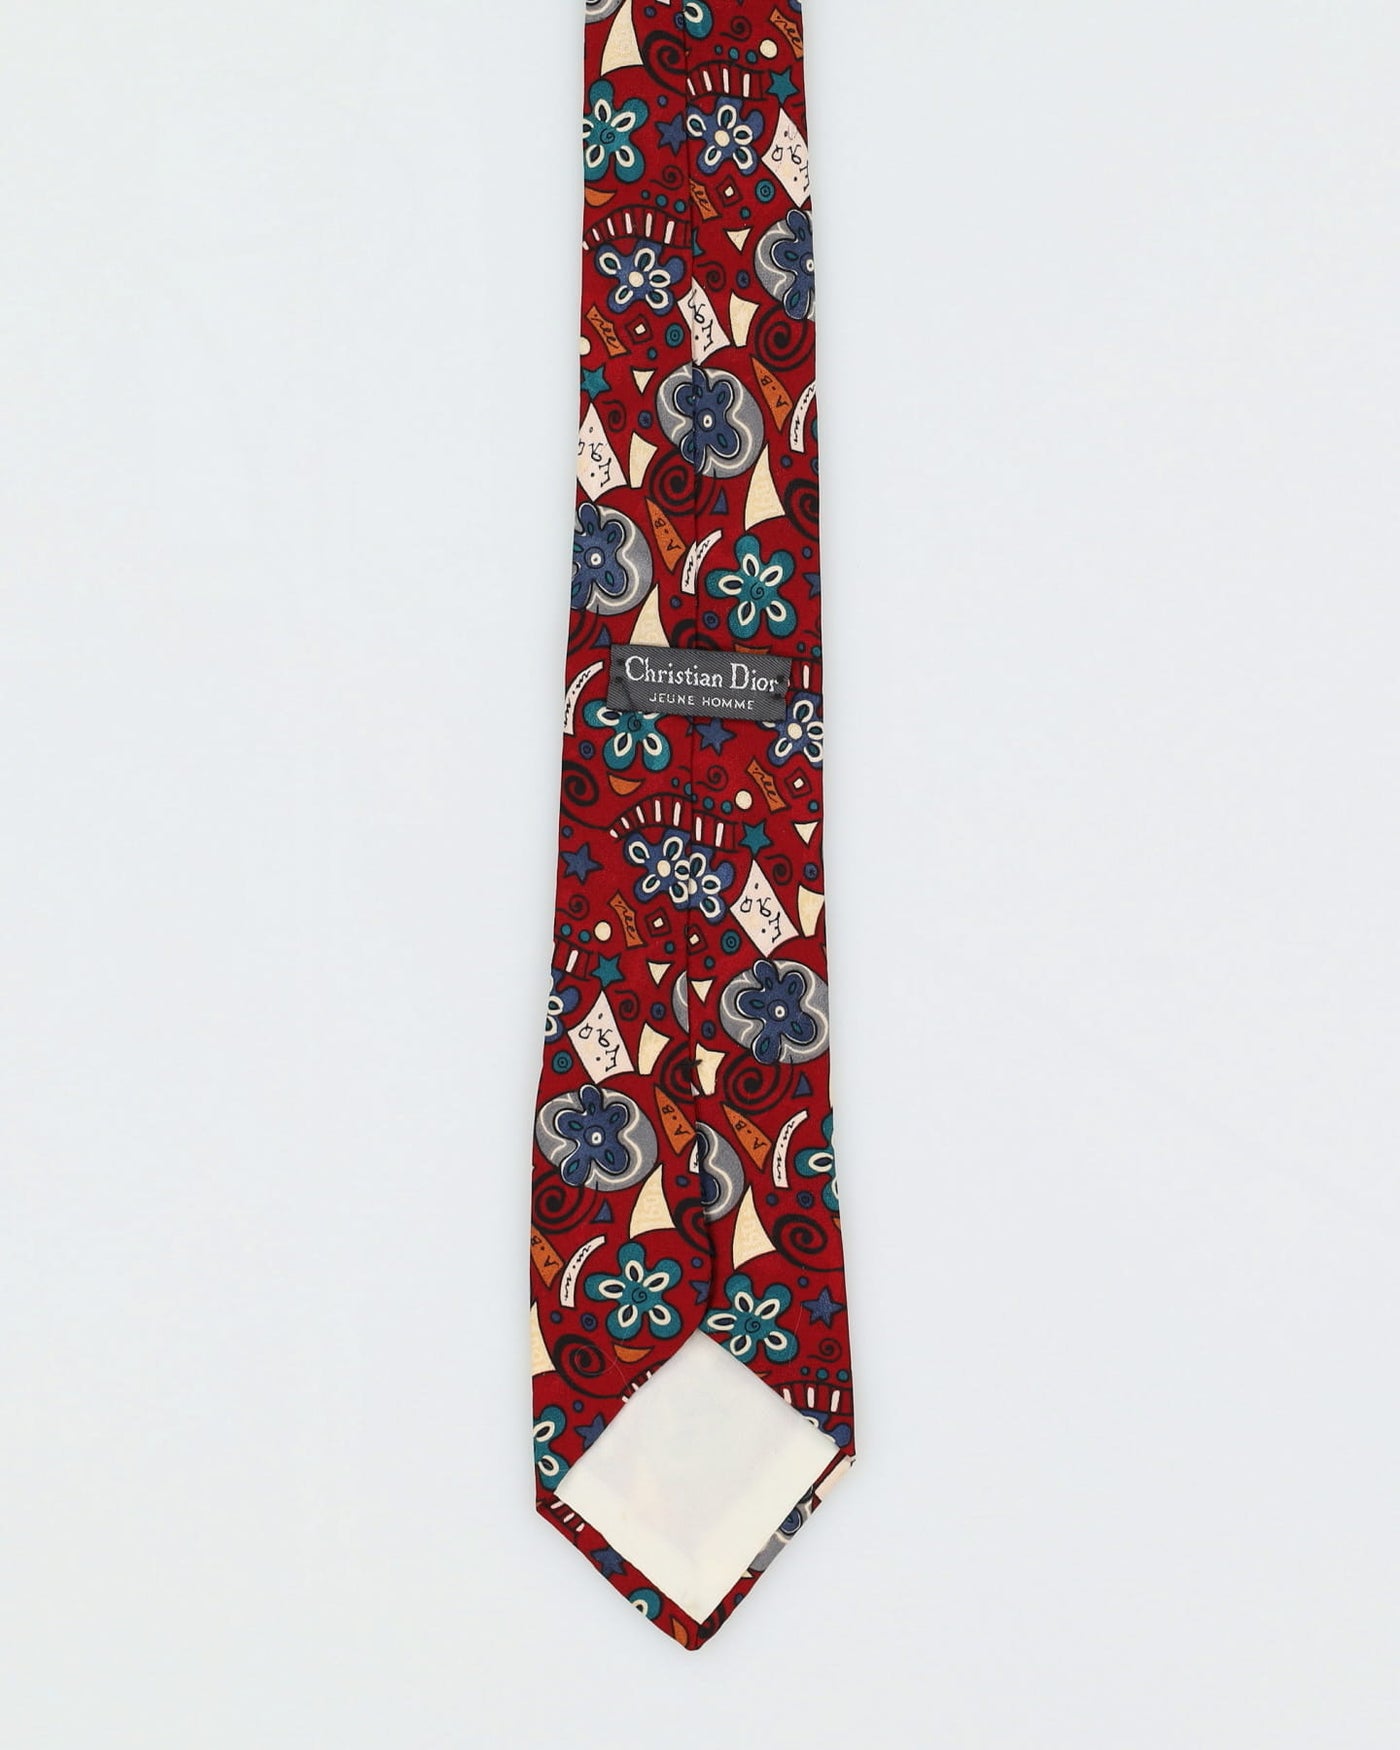 Vintage 90s Christian Dior Dark Red Patterned Tie